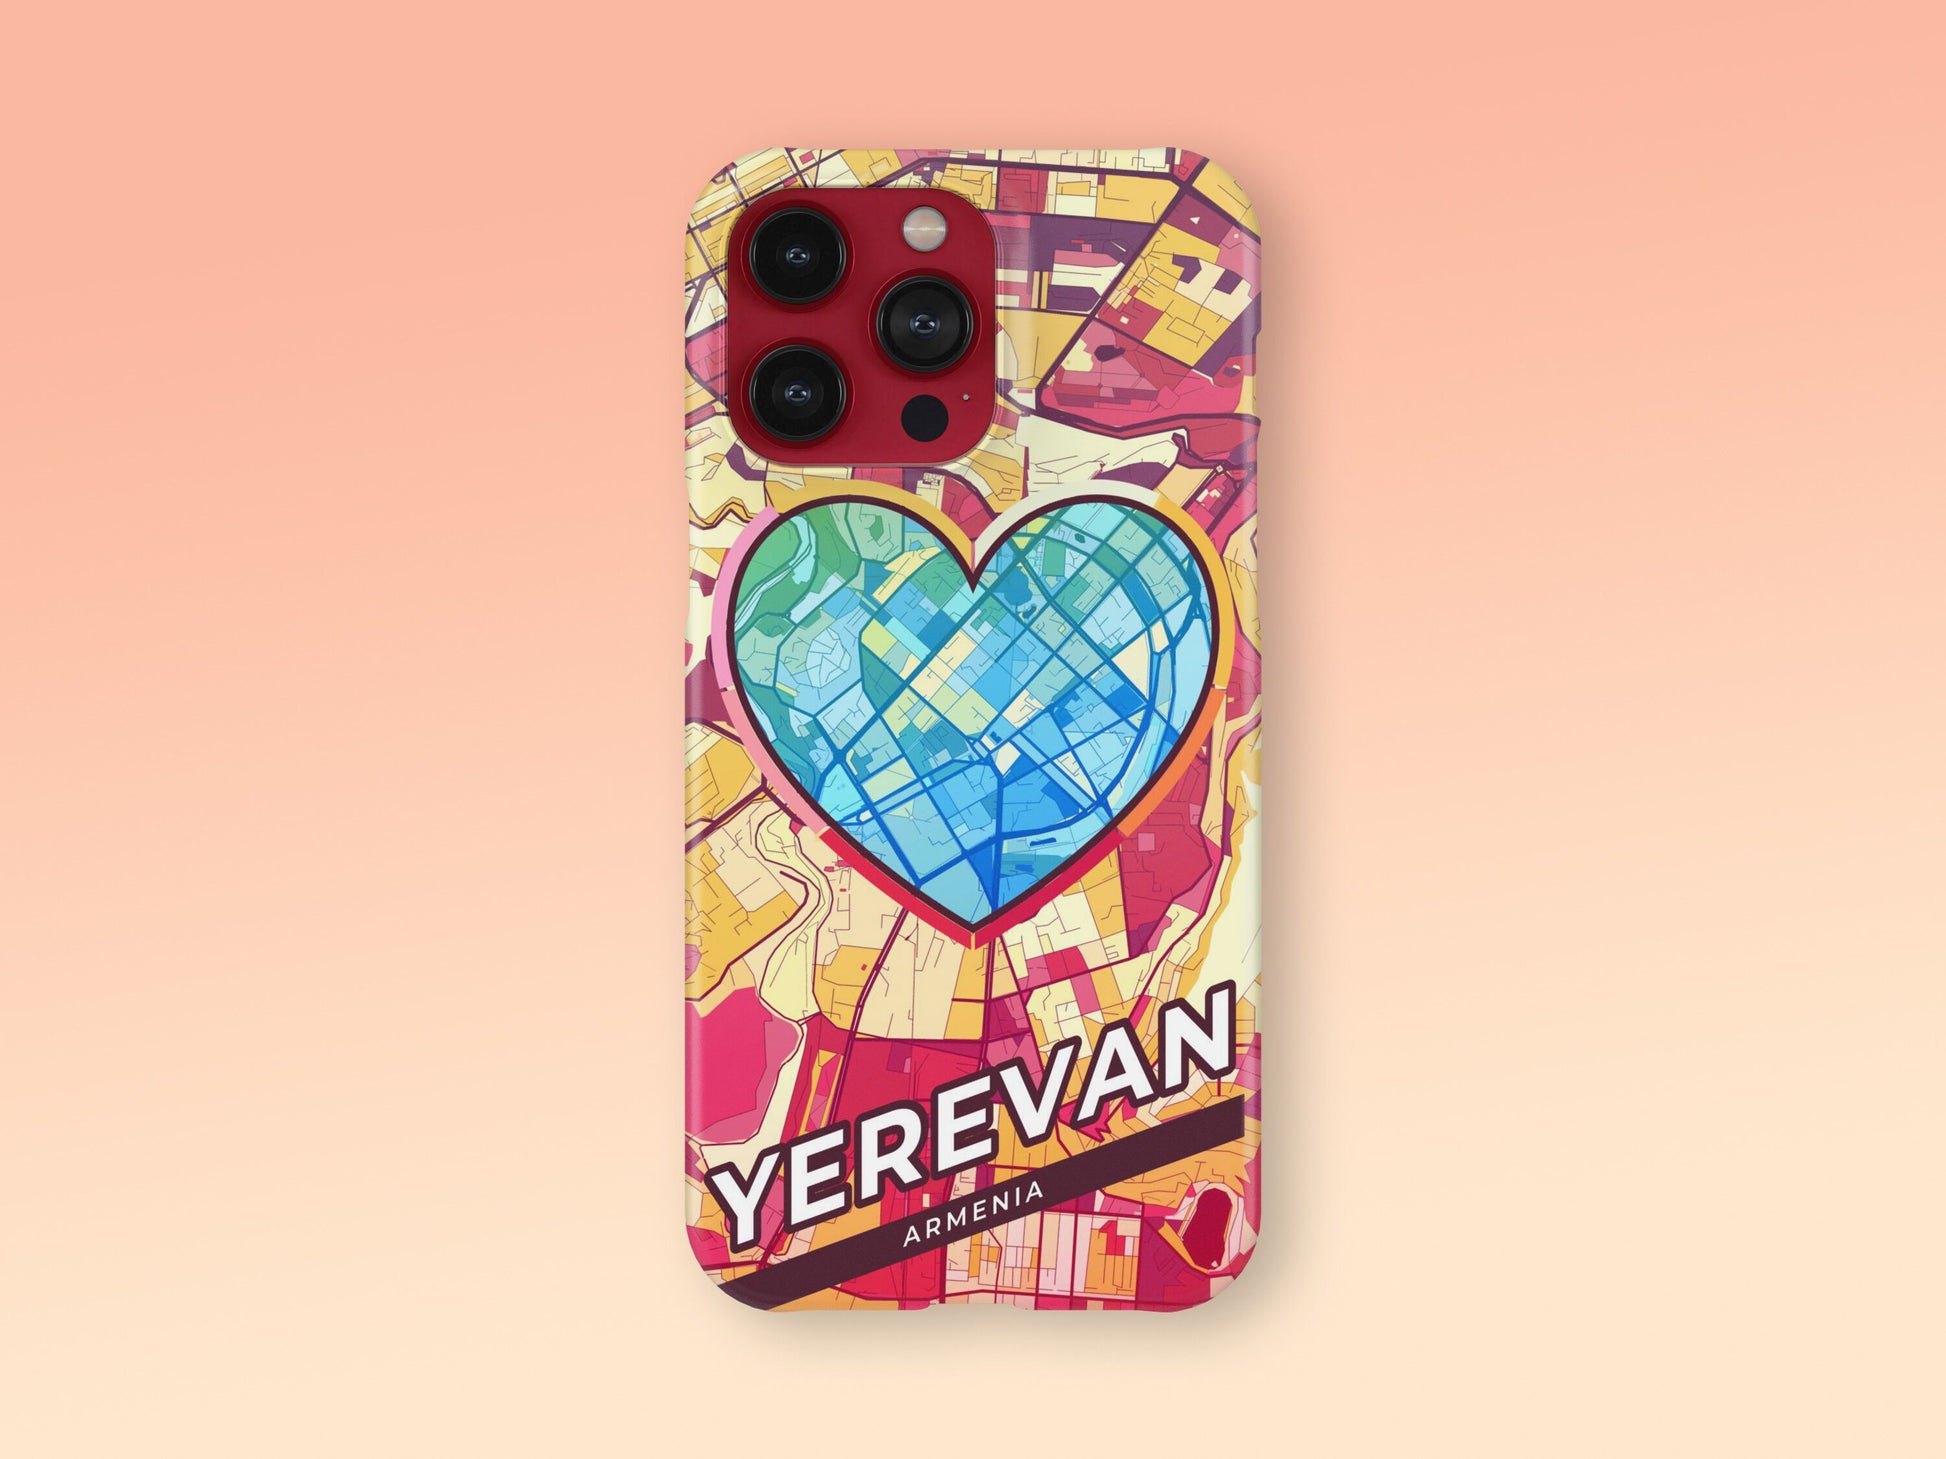 Yerevan Armenia slim phone case with colorful icon 2